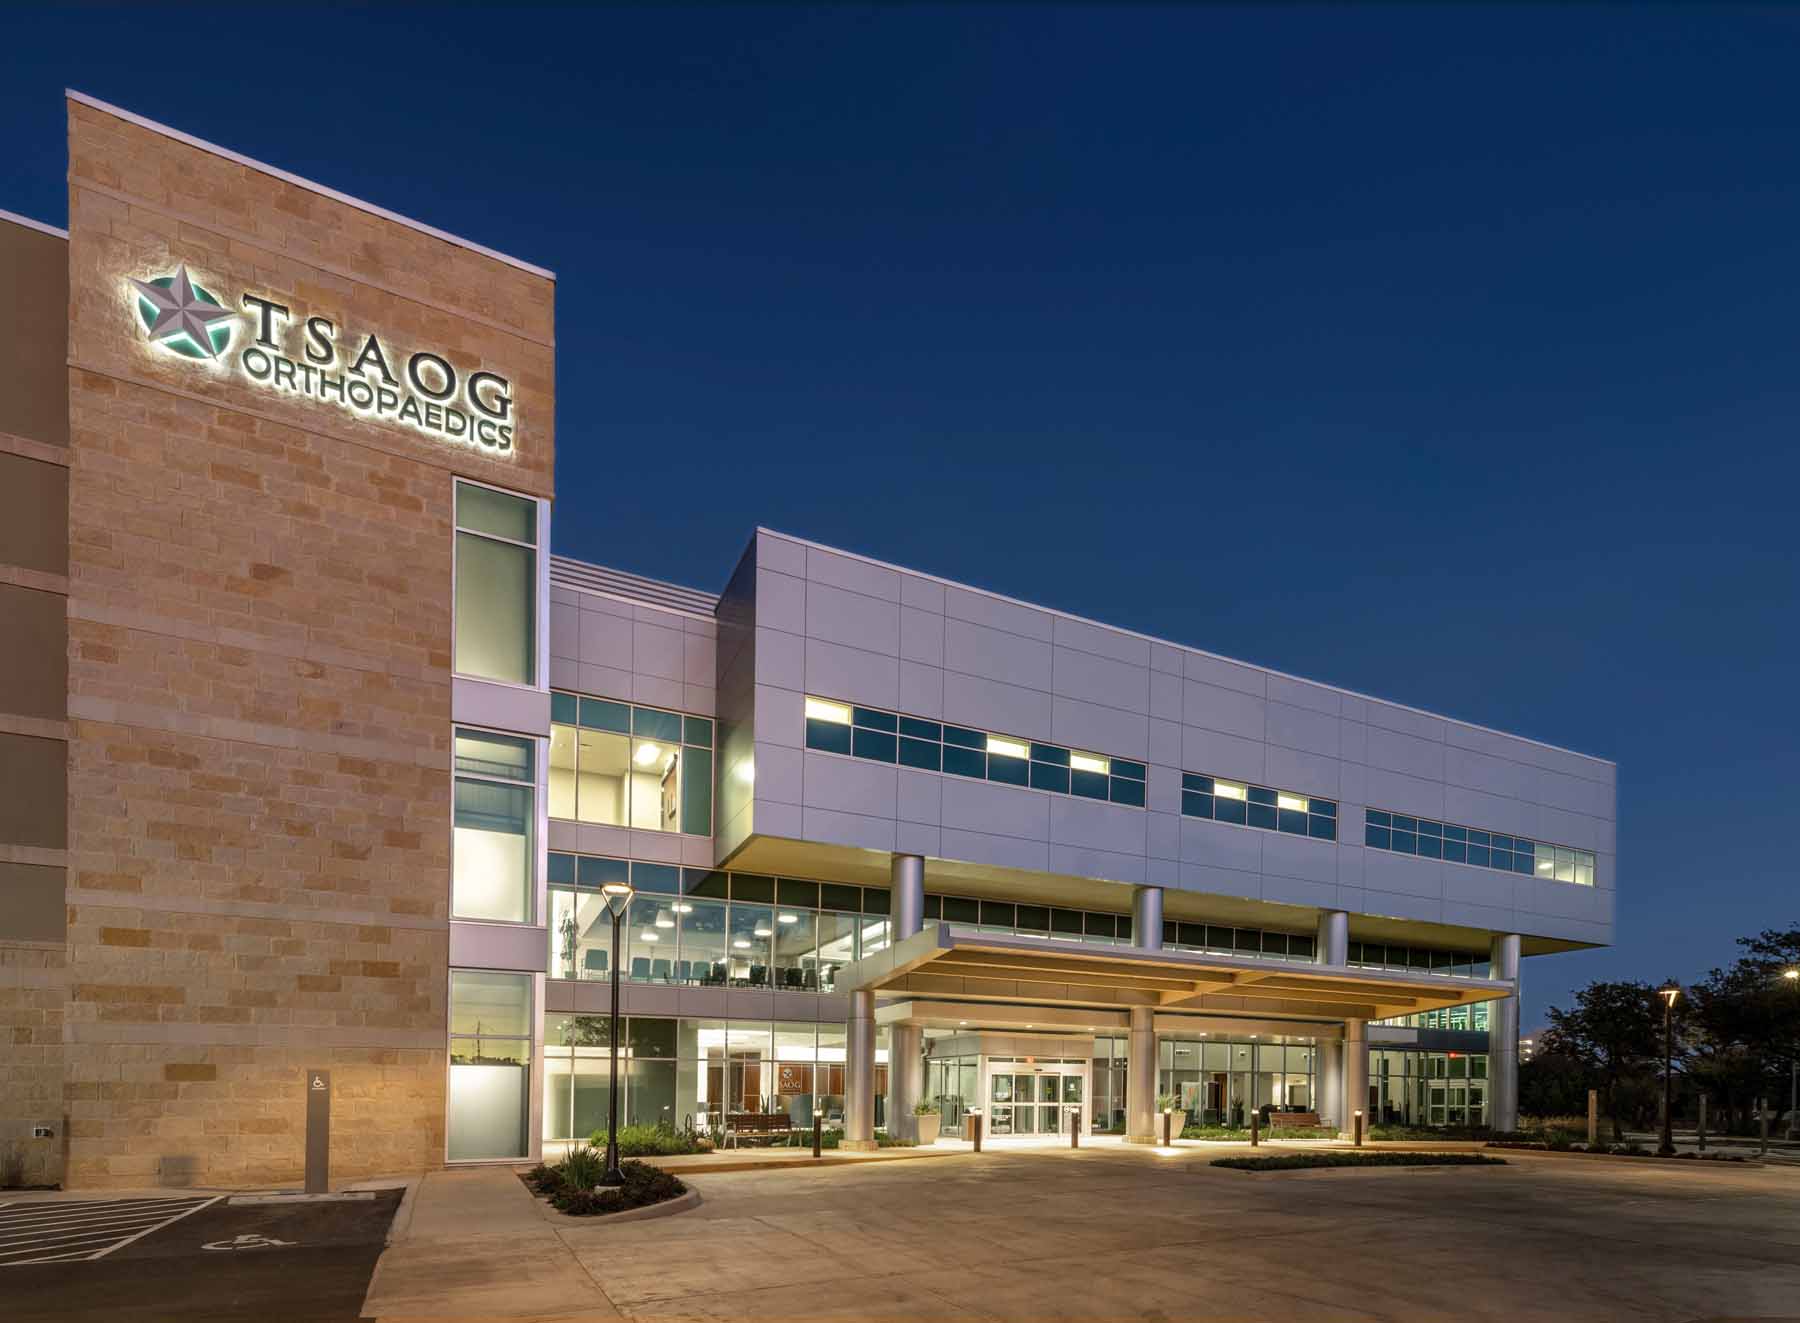 TSAOG Ridgewood Medical Office Building & Ambulatory Surgery Center Joeris